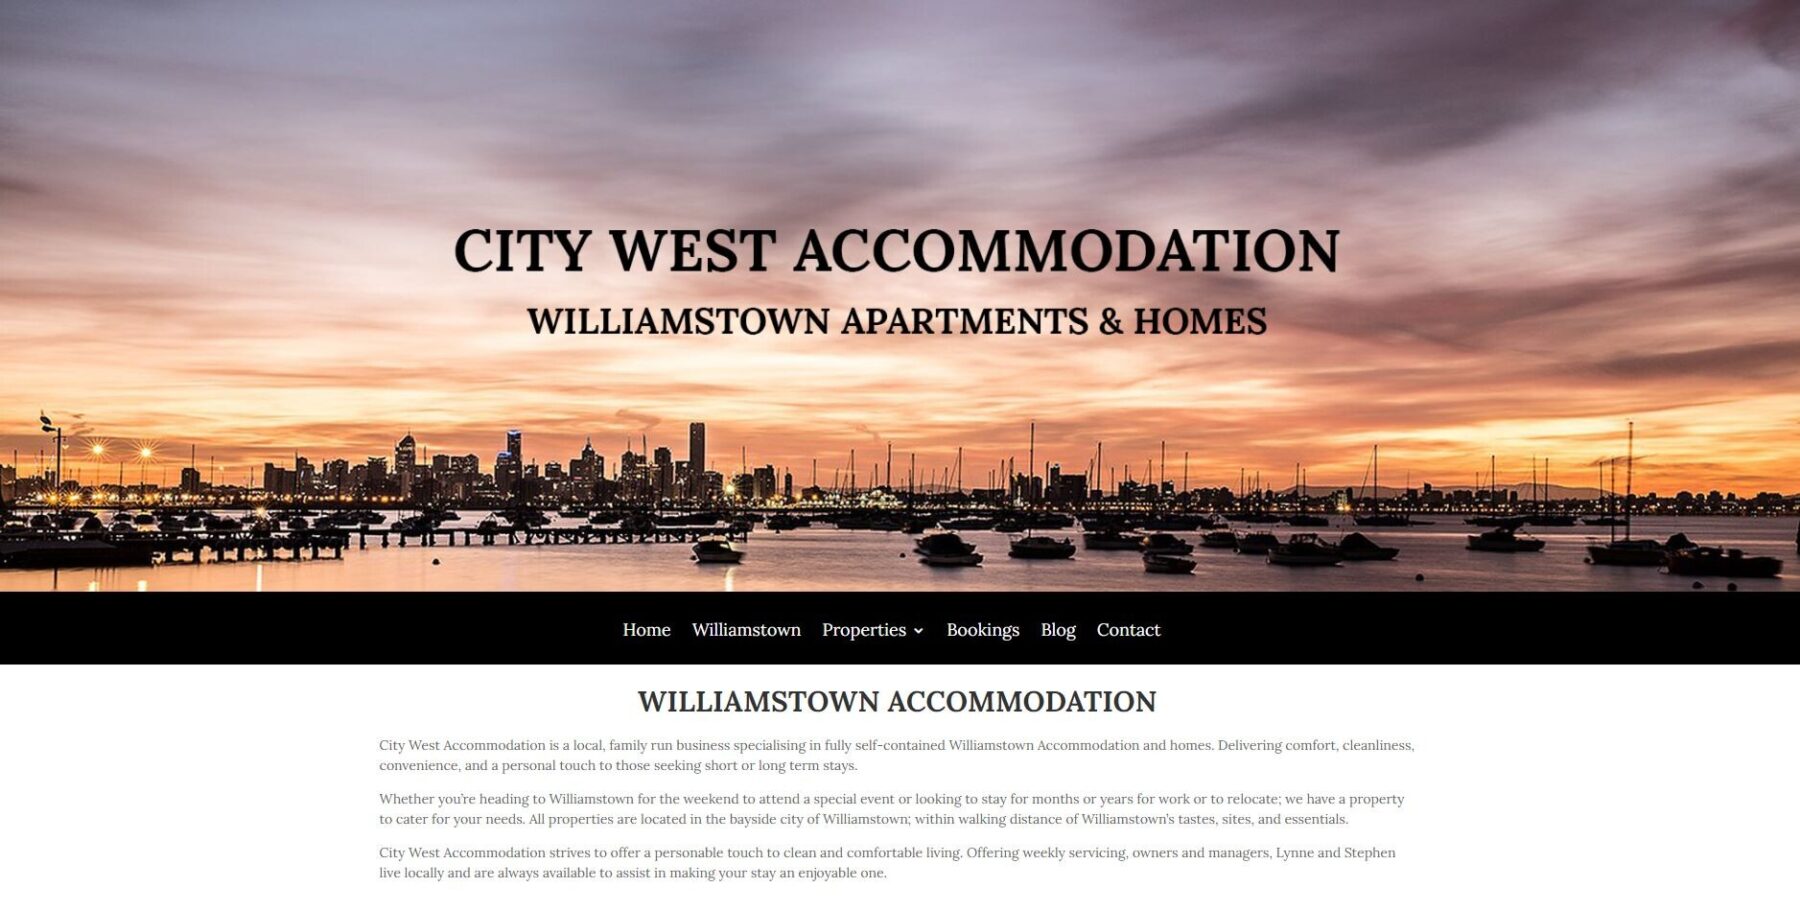 city west accommodation wedding night accommodations melbourne